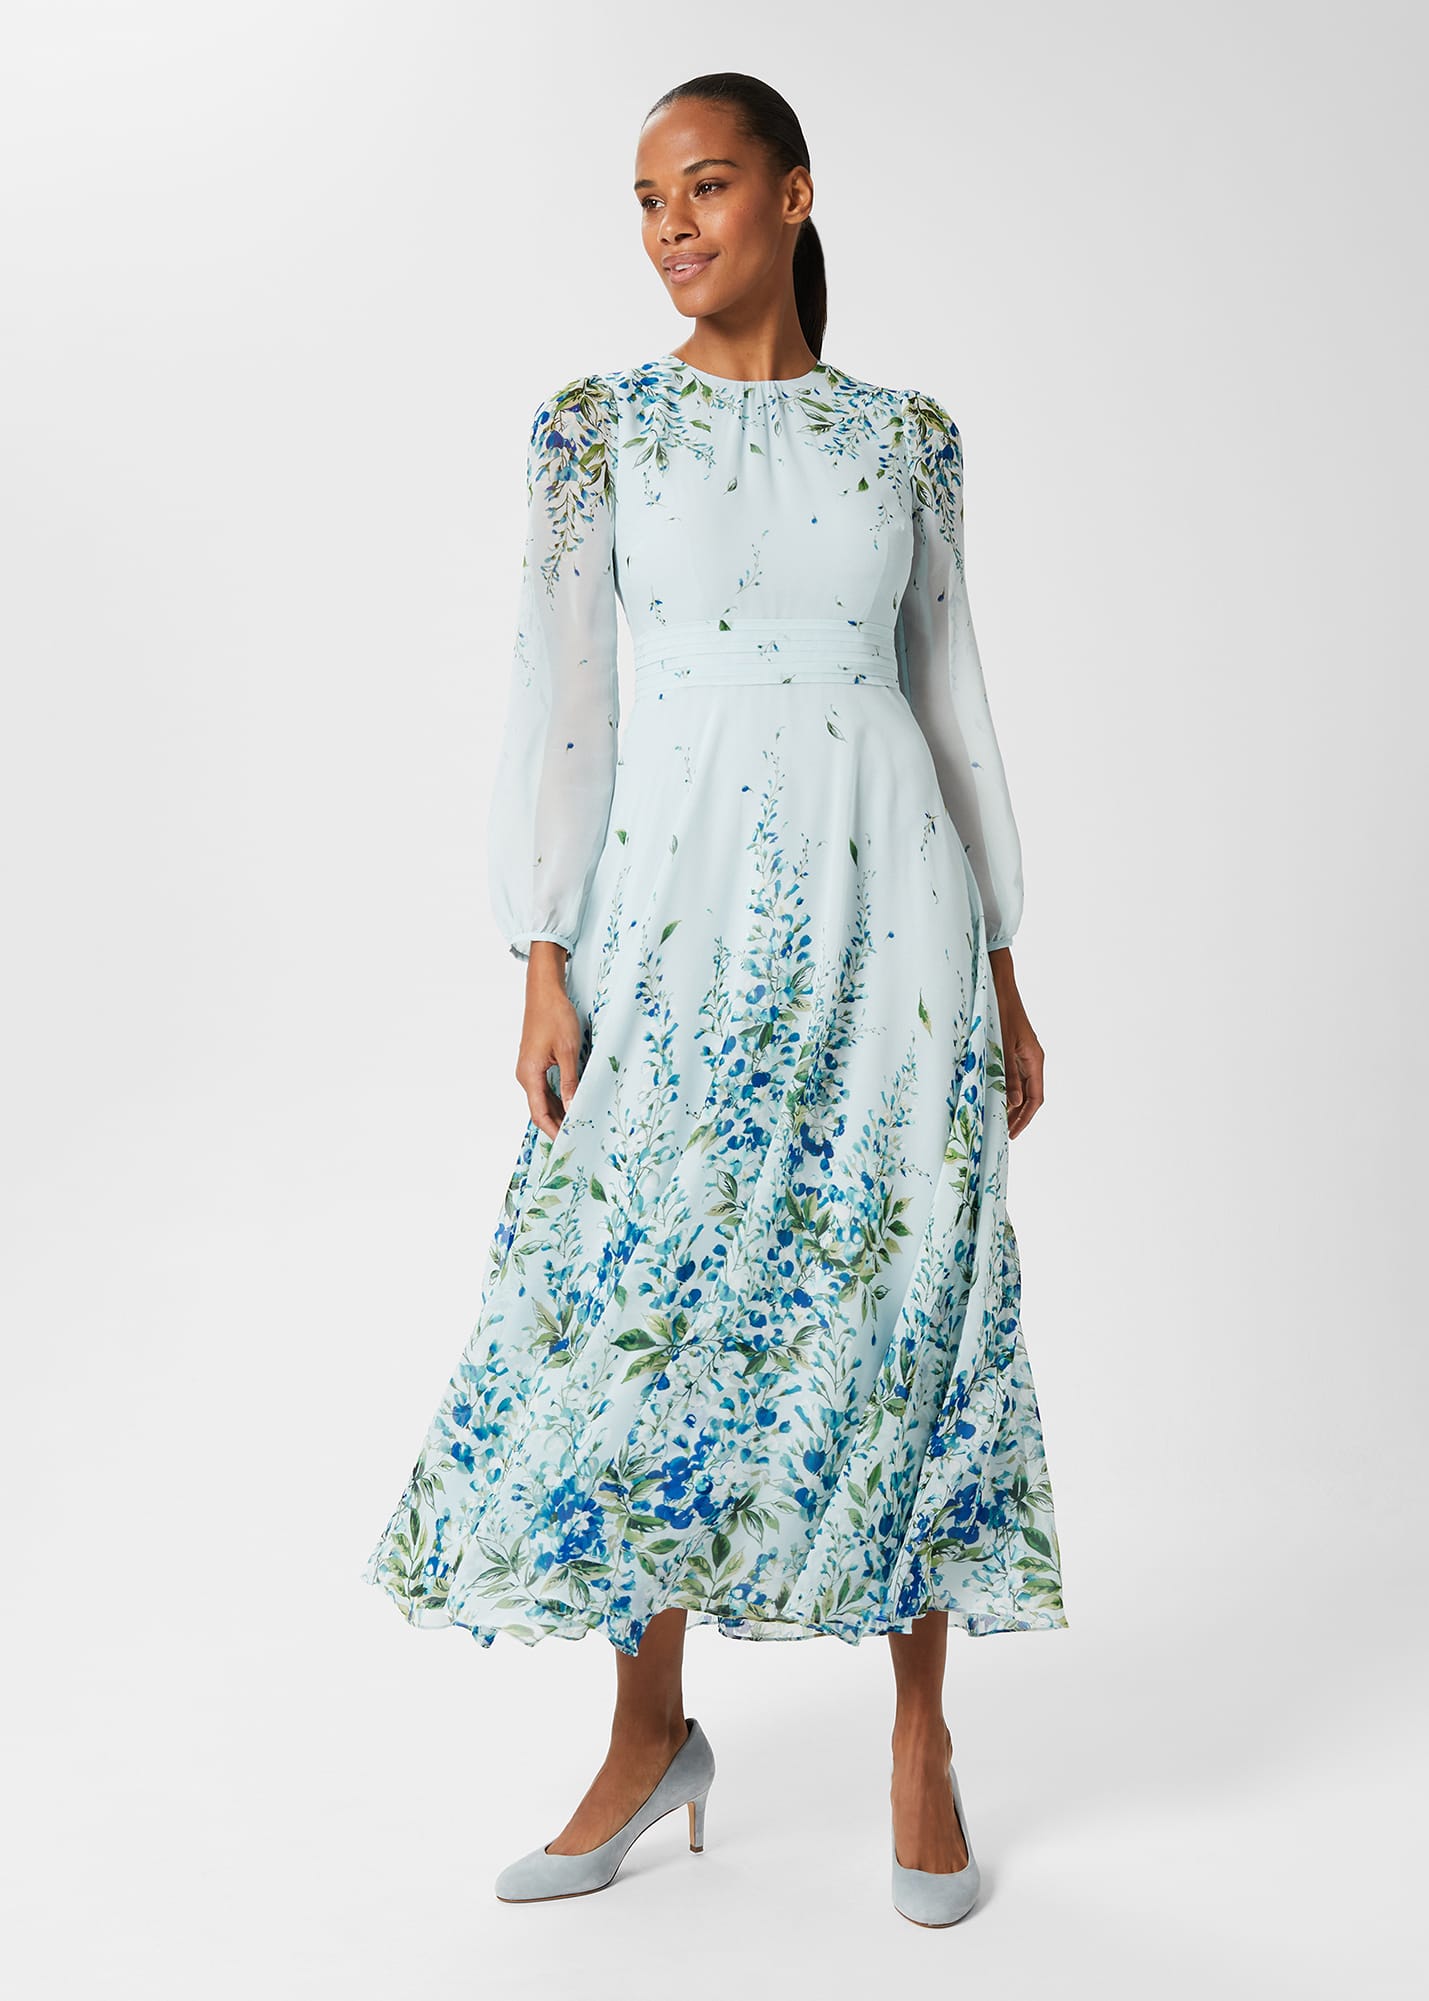 Hobbs Women's Giselle Silk Floral Dress - Pale Blue Multi